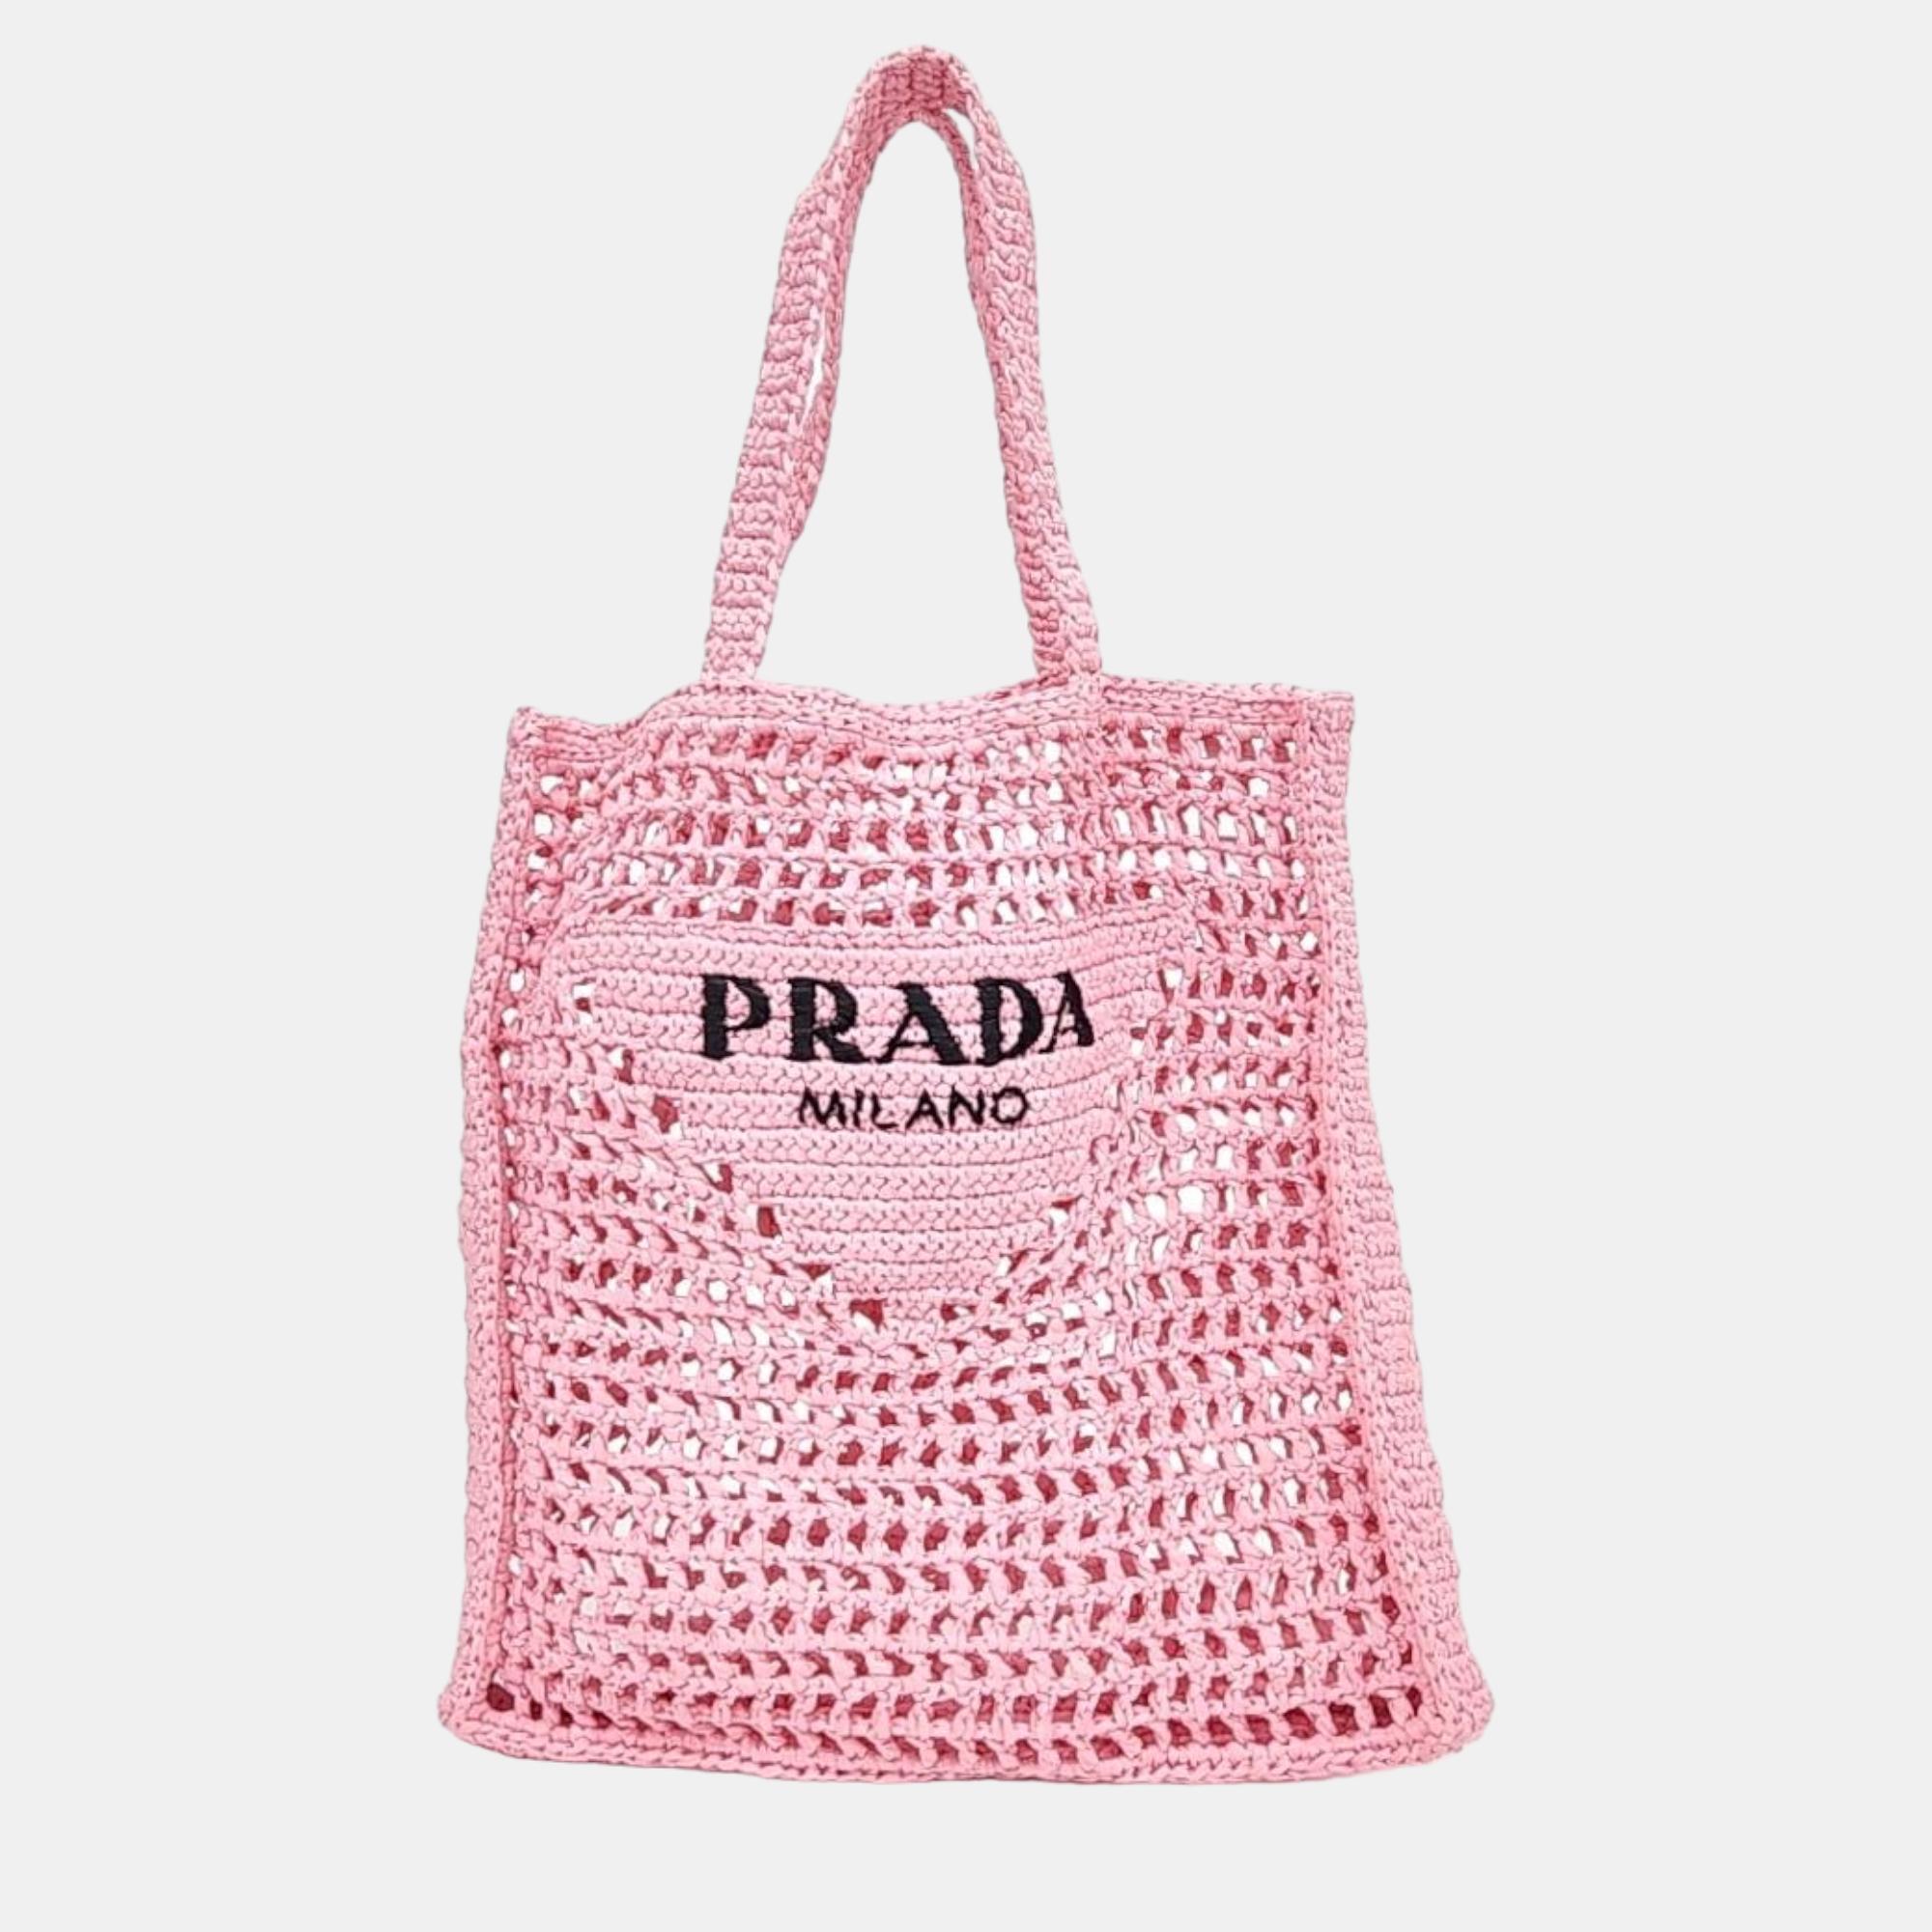 Prada pink crochet shoulder bag